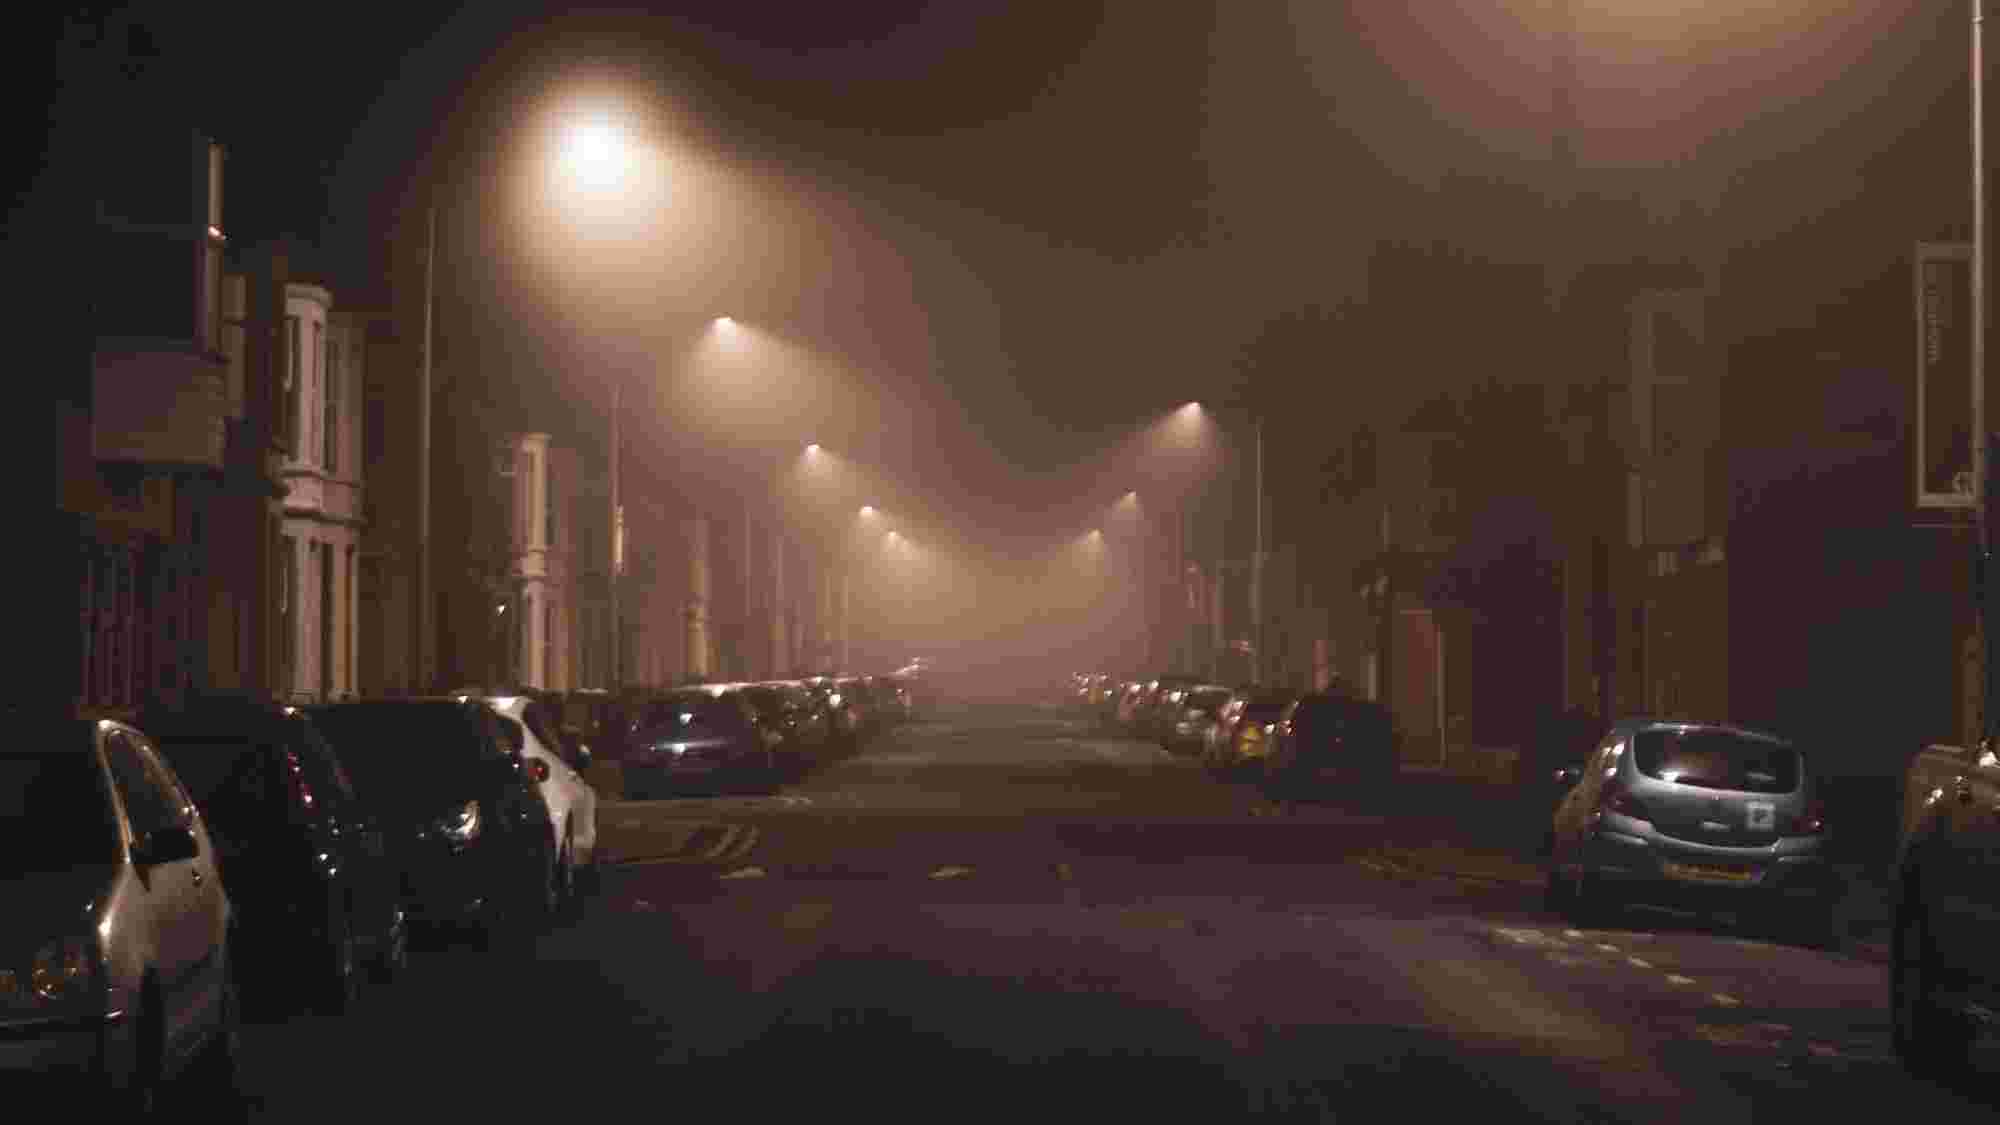 A street at night